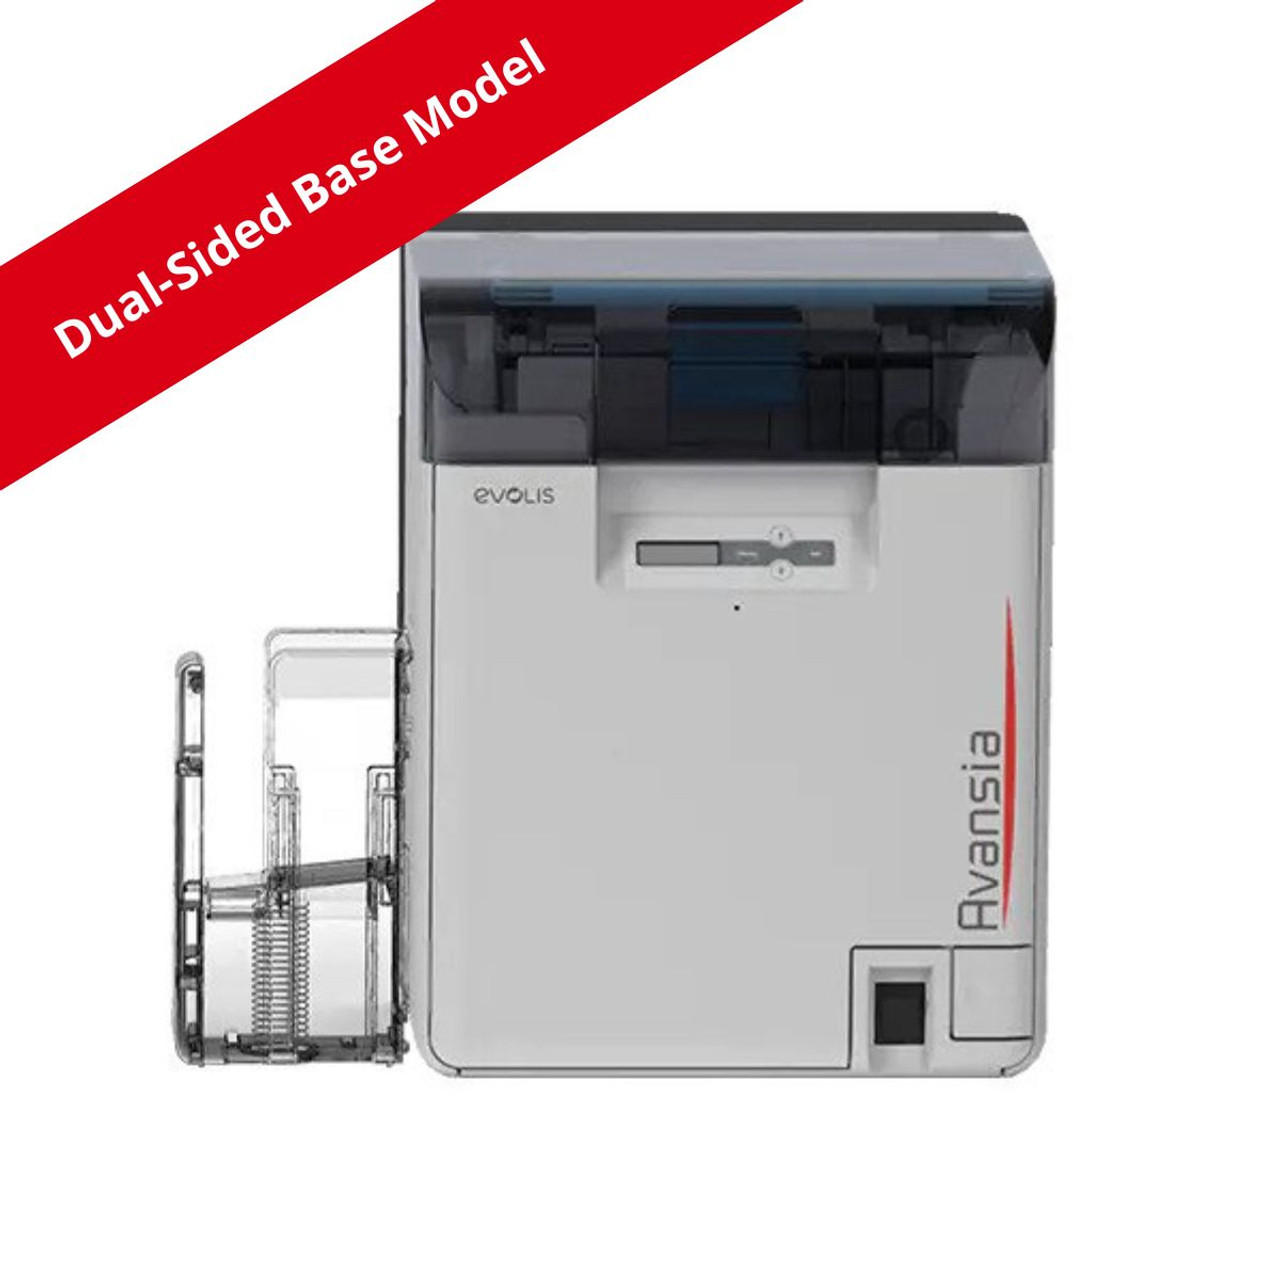 Evolis Avansia Dual-Sided Retransfer ID Card Printer